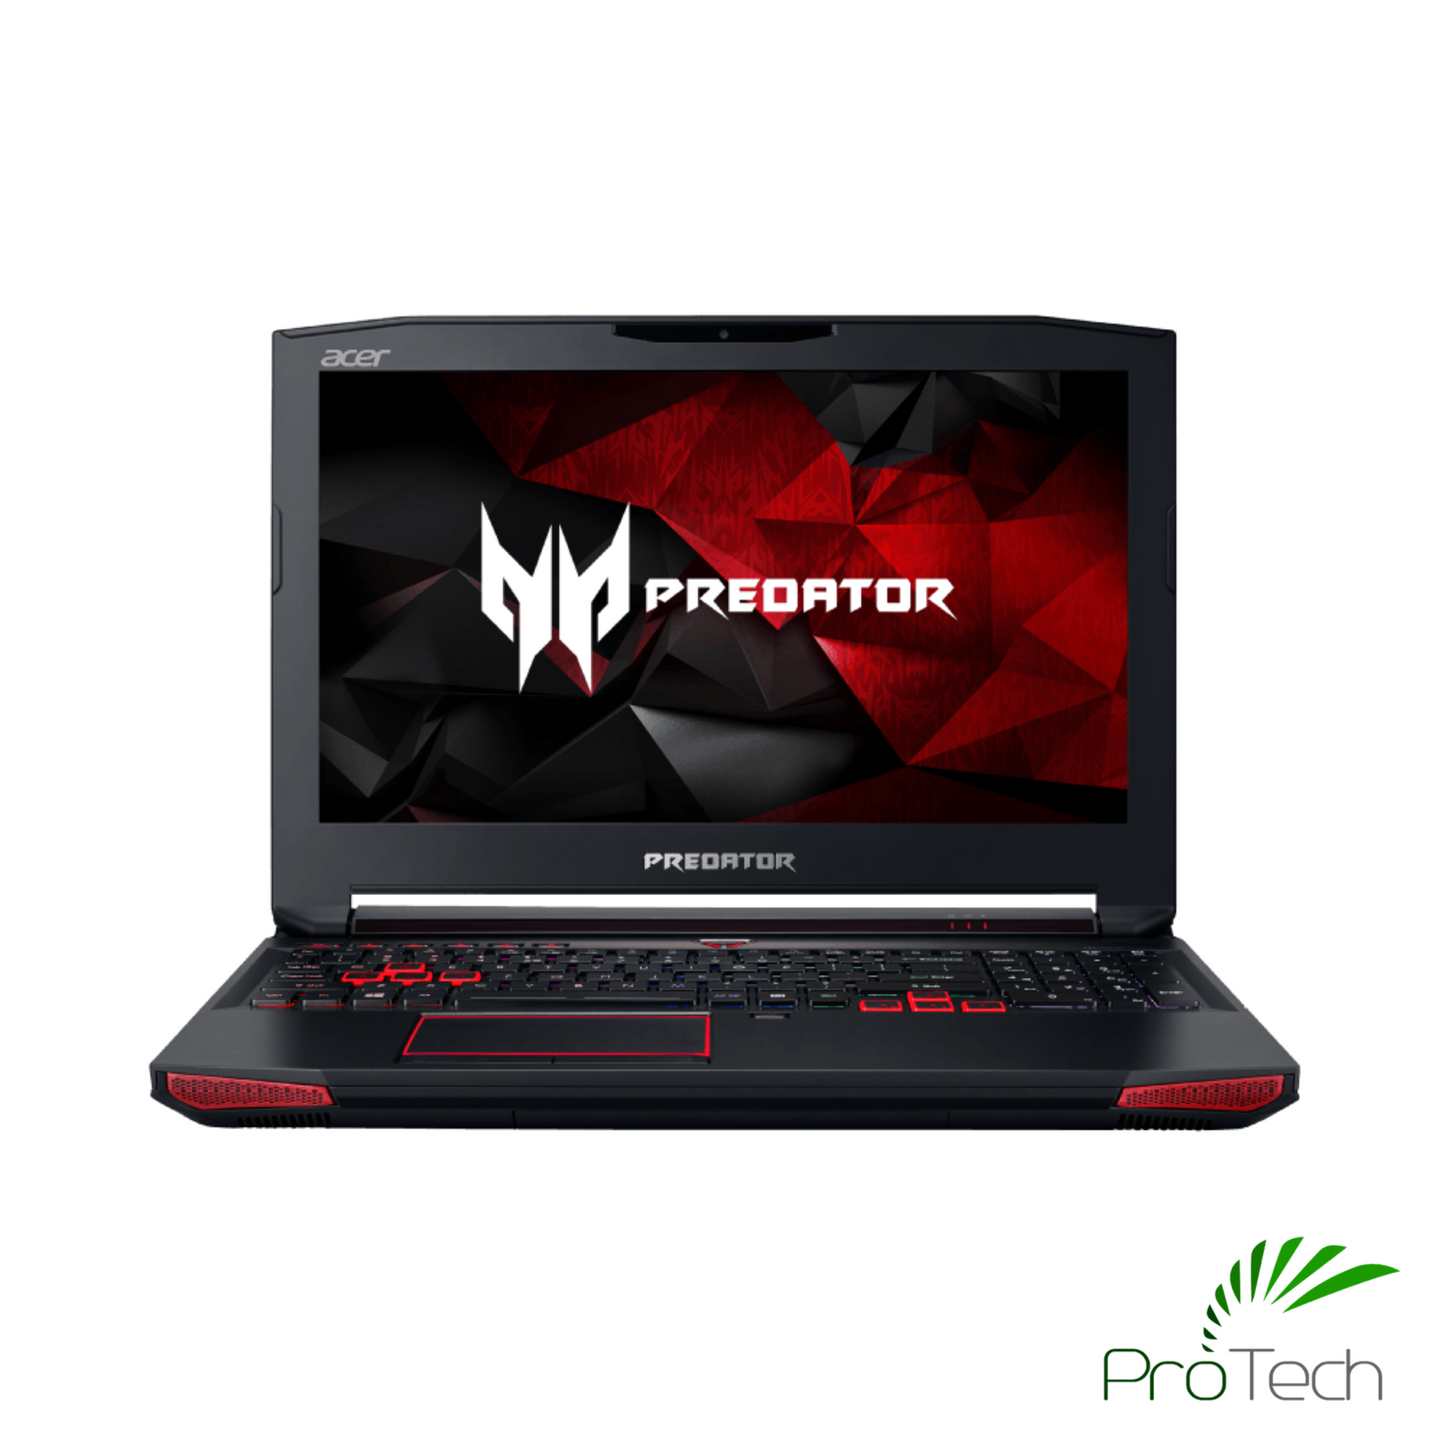 Acer Predator 17 G9-793 17.3" | Core i7 | 16GB RAM | 128GB SSD + 1TB HDD